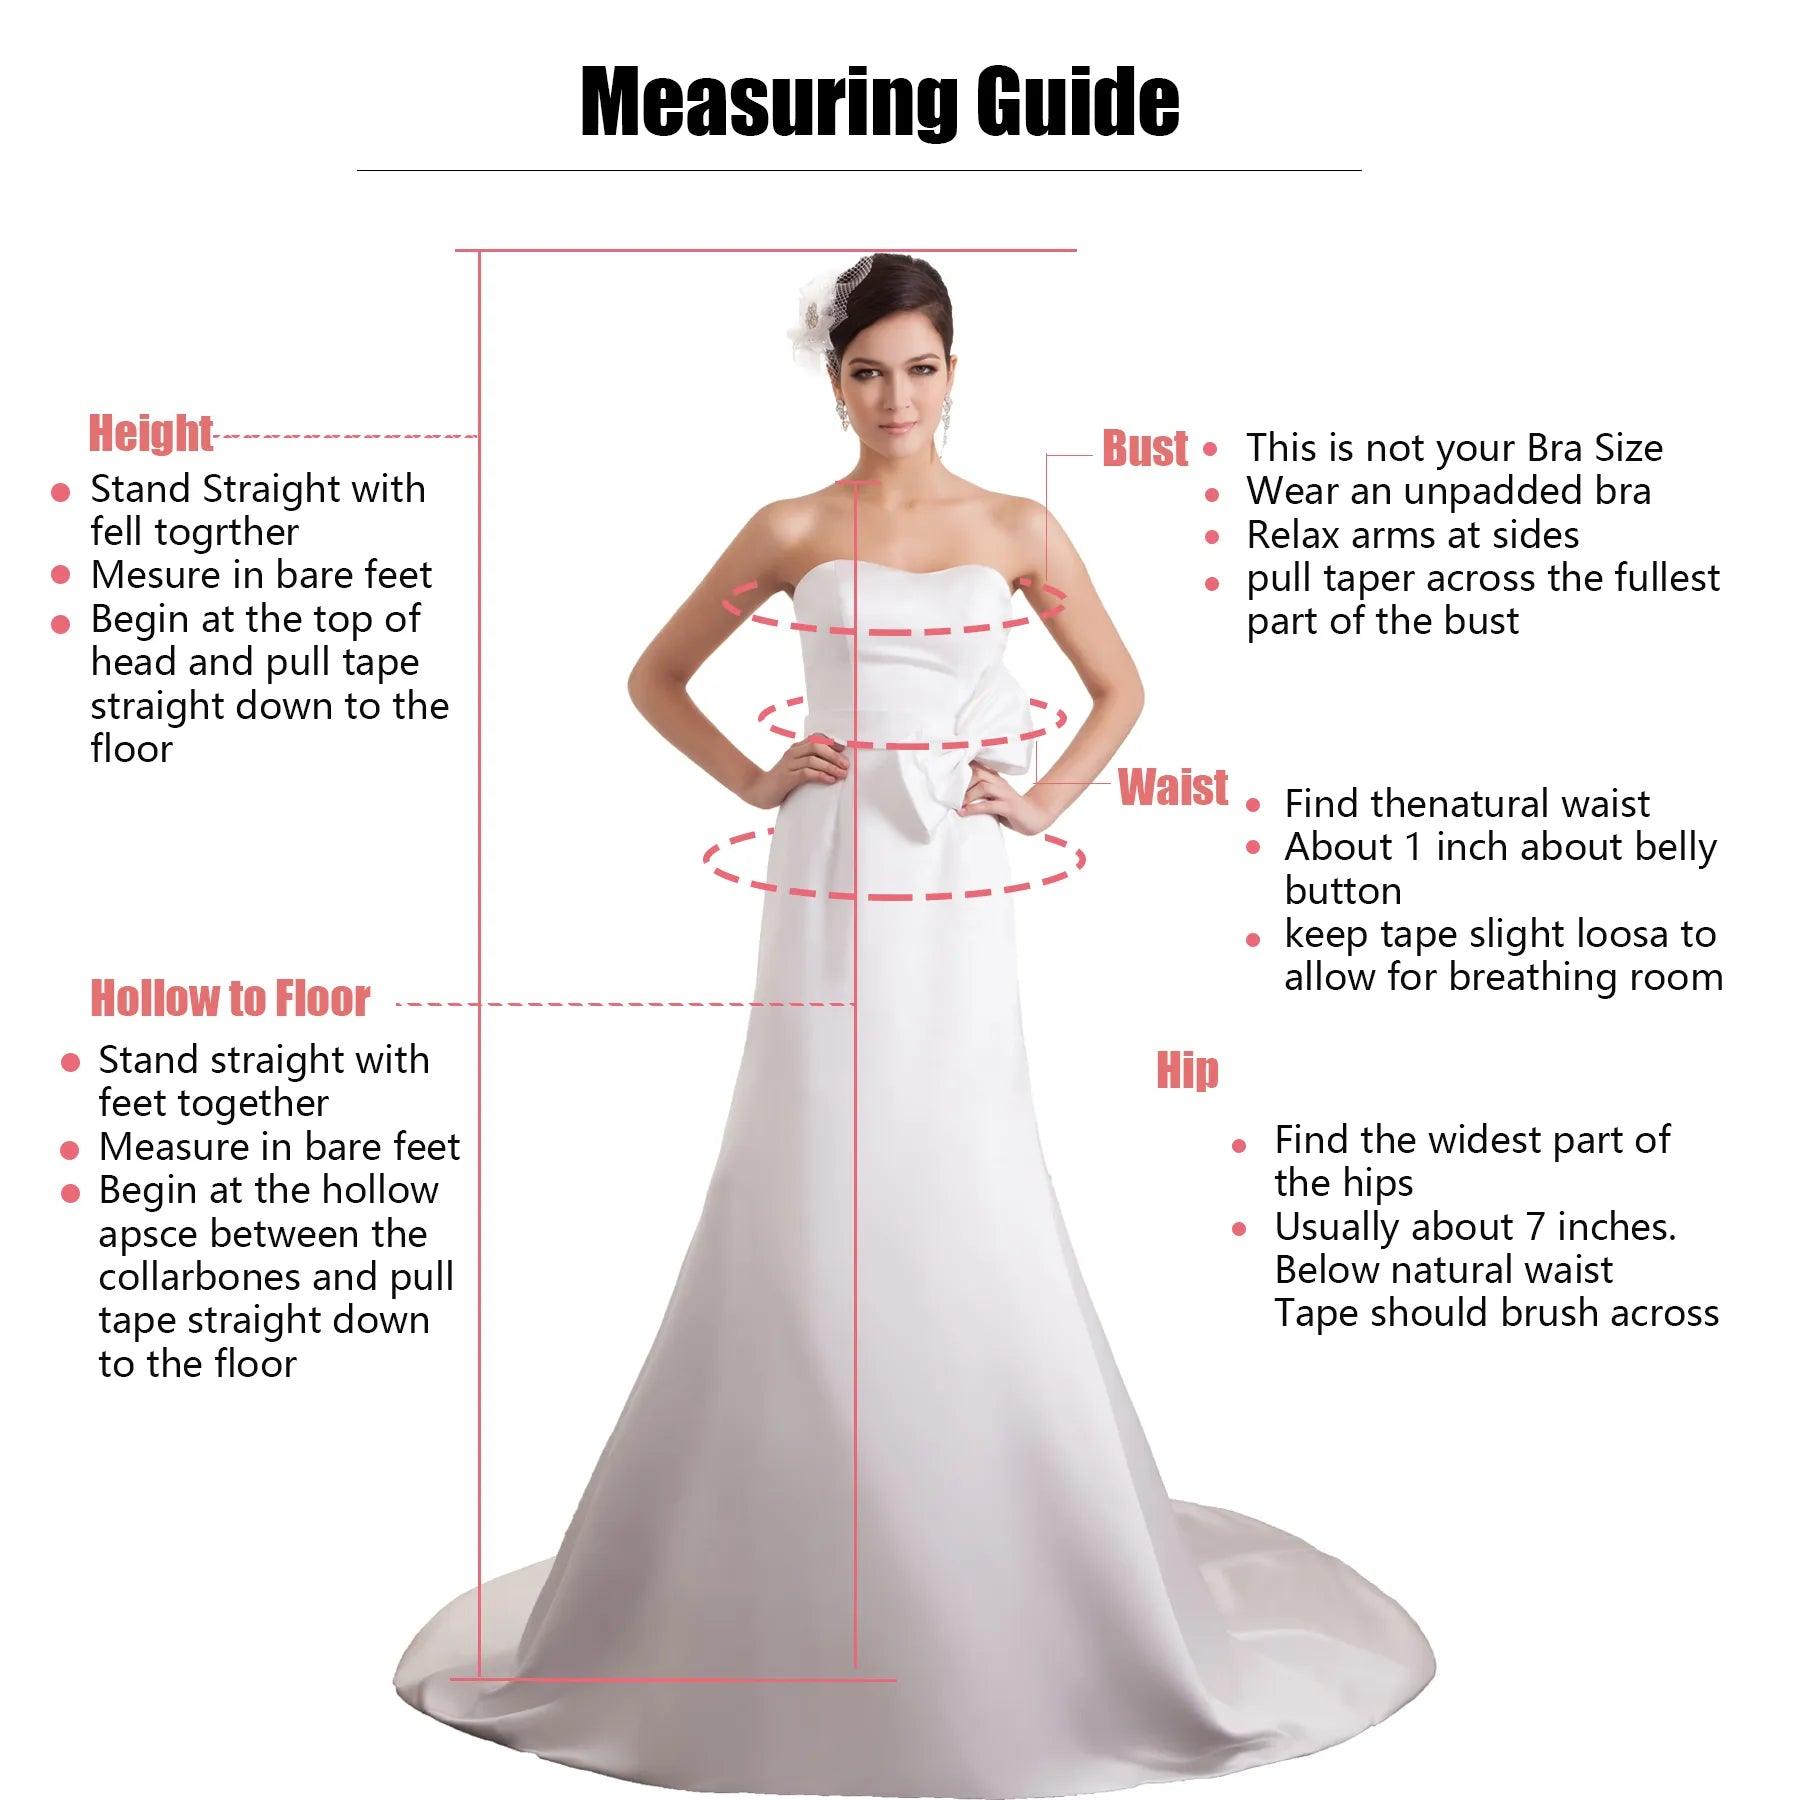 Sparkling Beaded Mermaid Wedding Dresses - L & M Kee, LLC